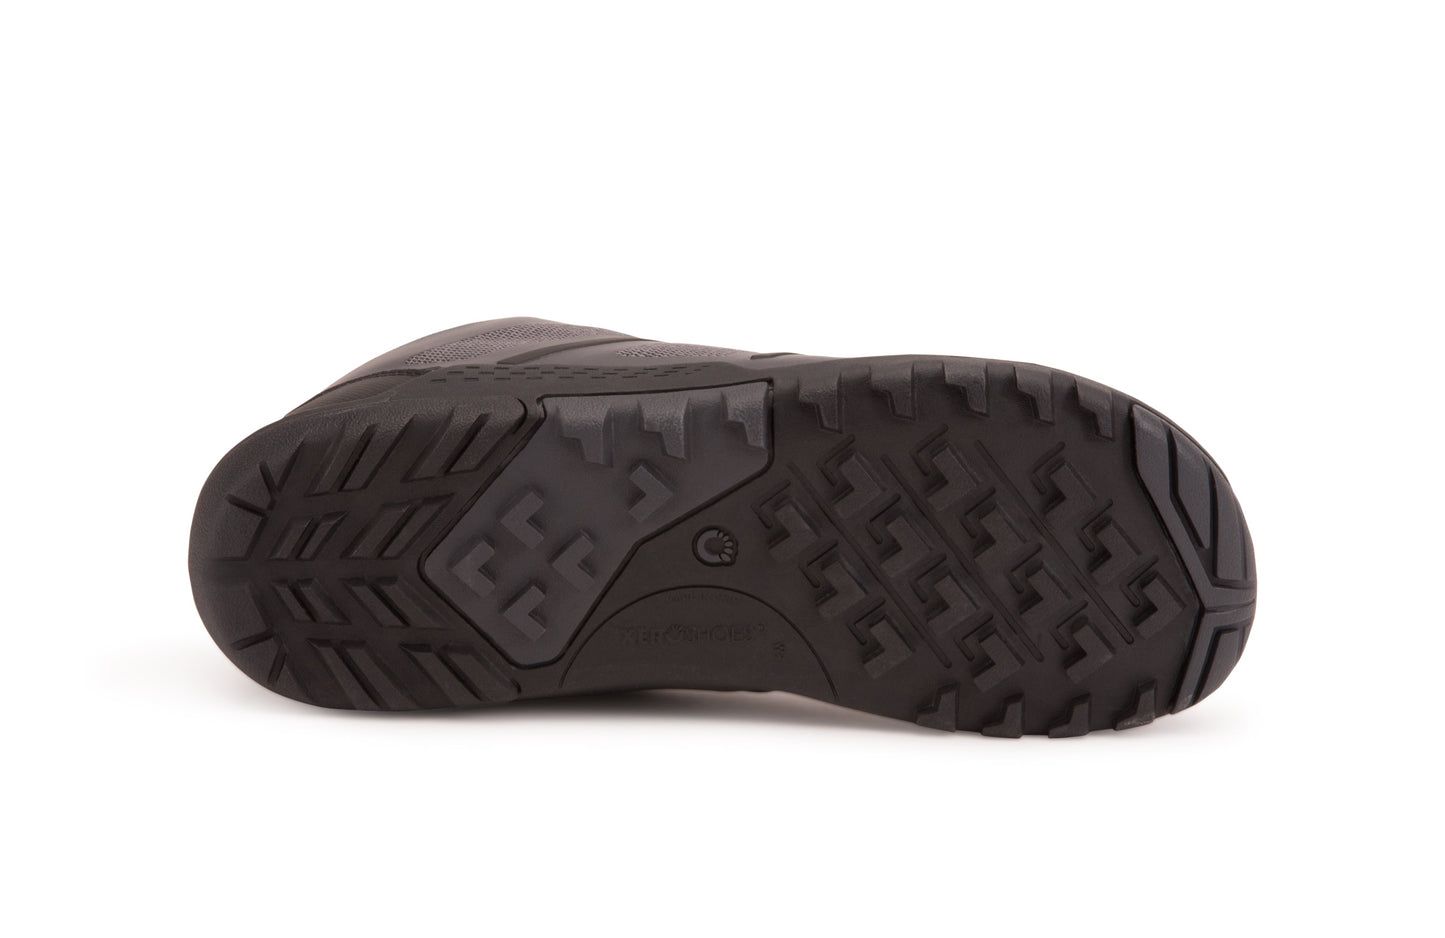 Xero Shoes Daylite Hiker Fusion Womens barfods vandrestøvler til kvinder i farven asphalt, saal